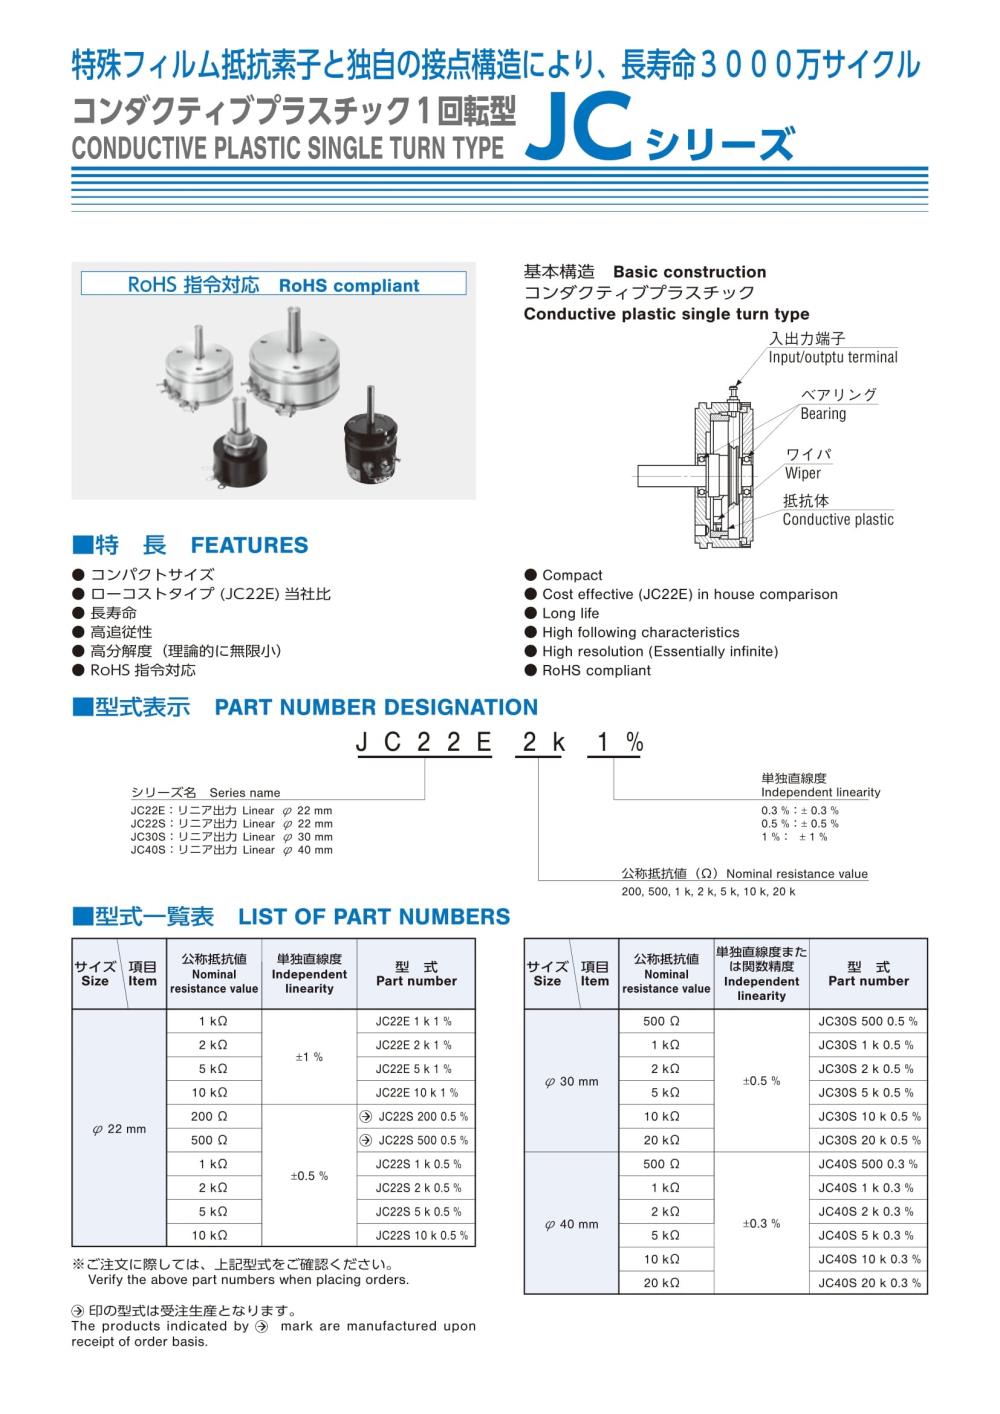 NIDEC Potentiometer JC40S Series,JC40S 500 0.3%, JC40S 1K 0.3%, JC40S 2K 0.3%, JC40S 5K 0.3%, JC40S 10K 0.3%, JC40S 20K 0.3%, NIDEC Potentiometer,NIDEC,Instruments and Controls/Potentiometers